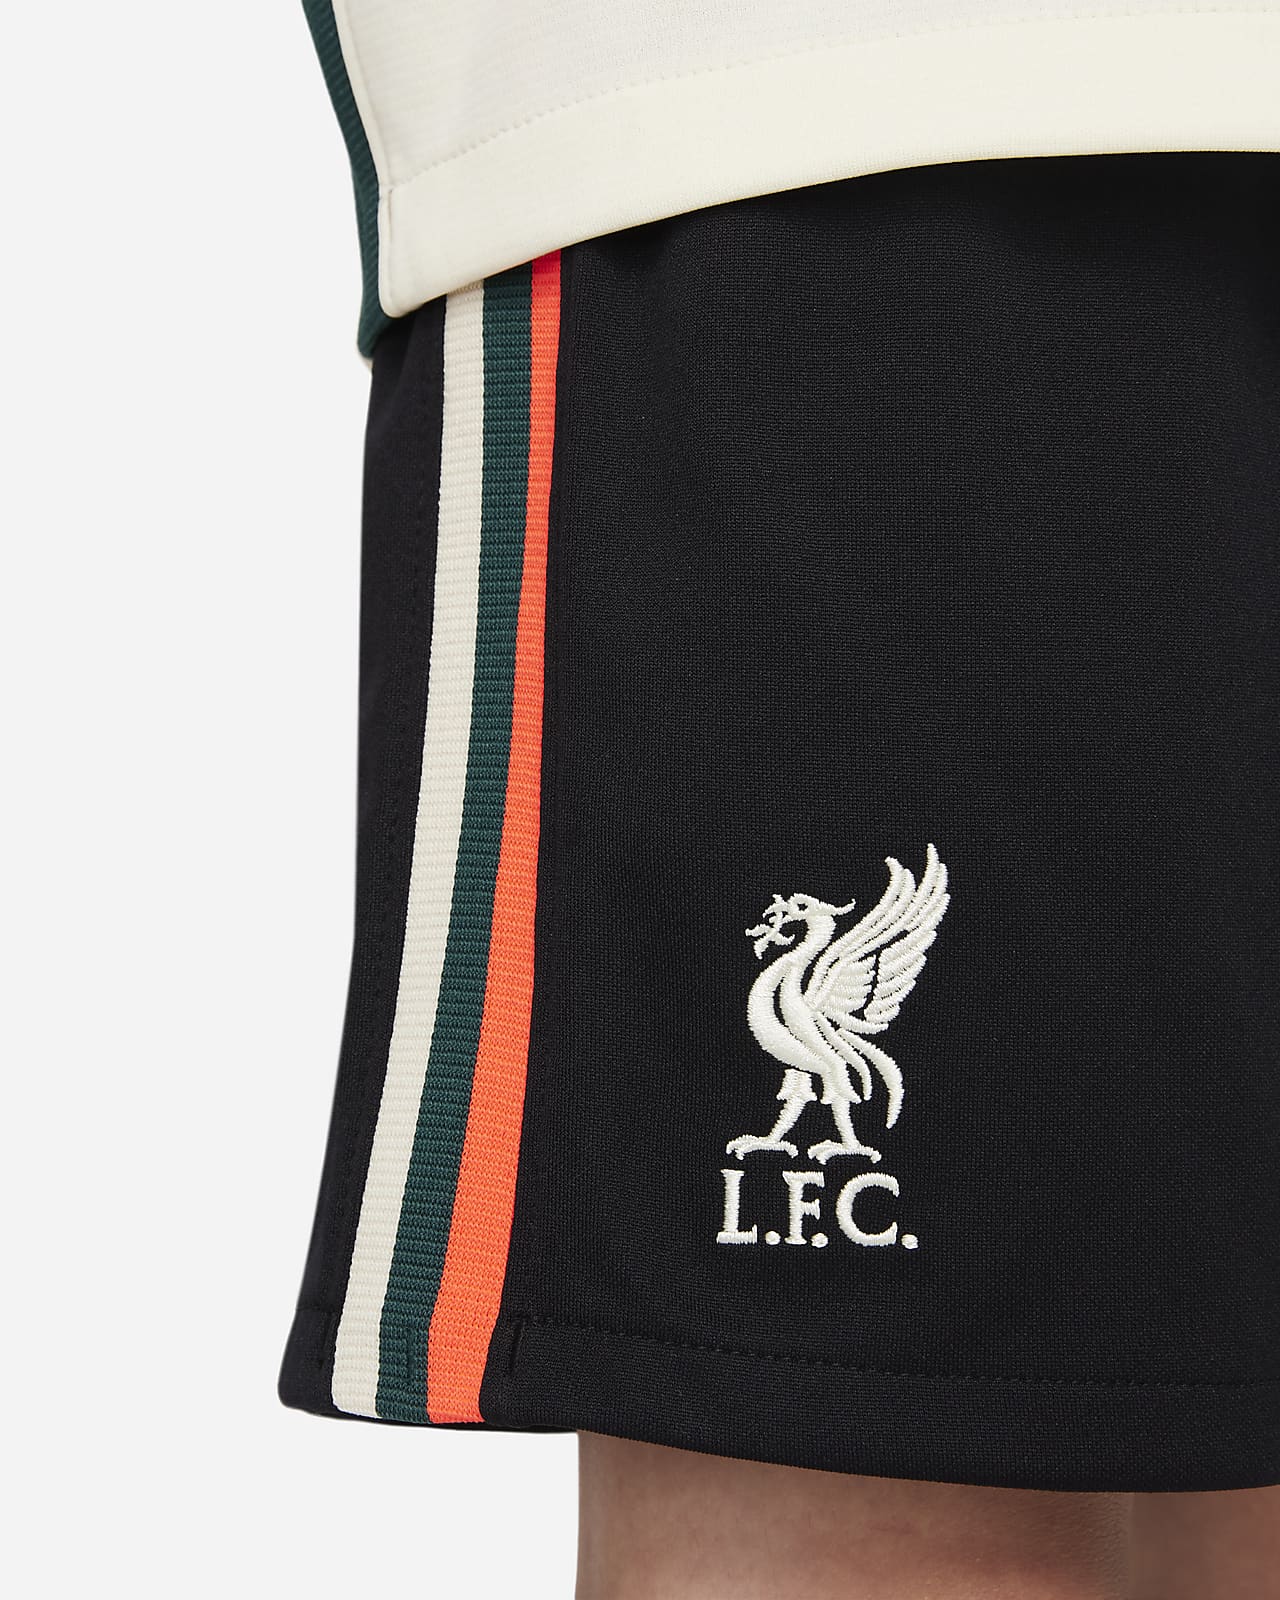 Liverpool FC 2021/22 Nike Away Kit - FOOTBALL FASHION